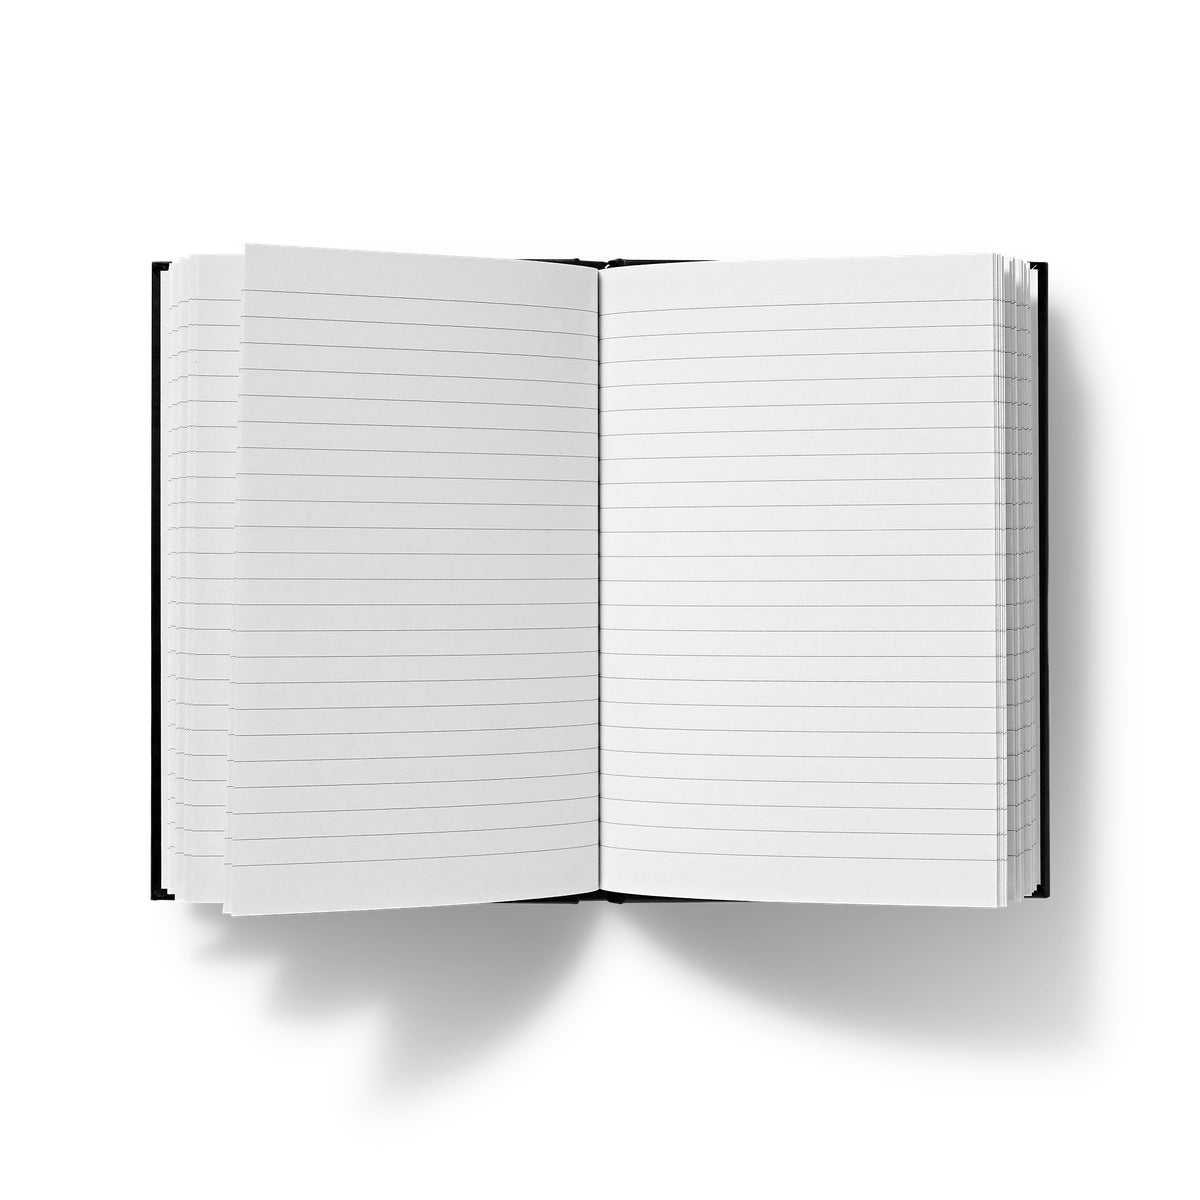 Alphonse crème - Notebook by the artist Boutin